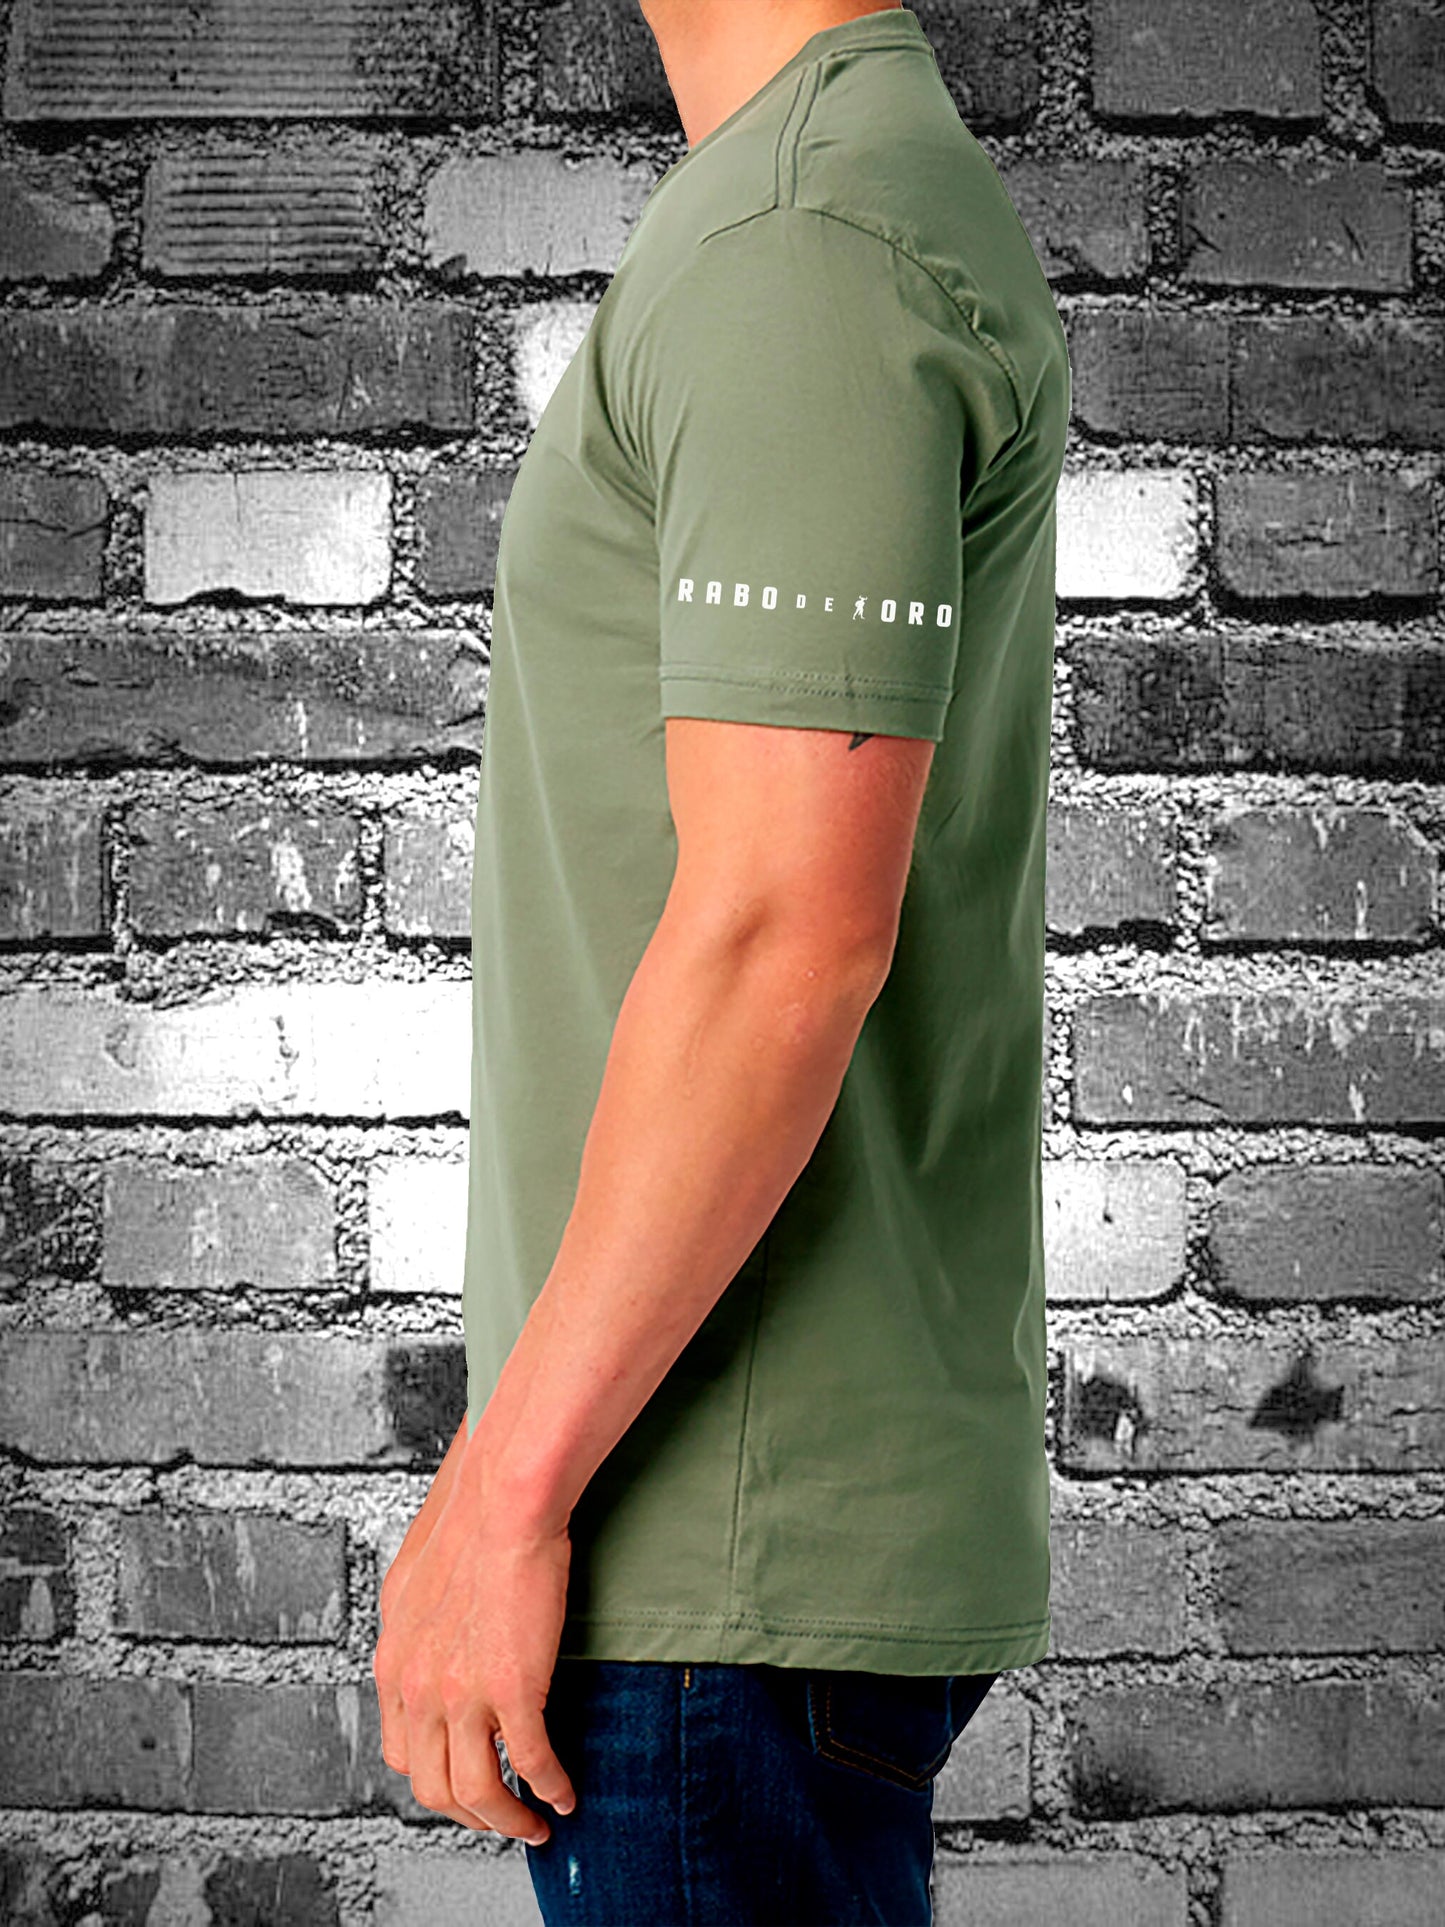 RaboDeToro - SIR, YES SIR! Olive T-Shirt with Spanking Paddle detail